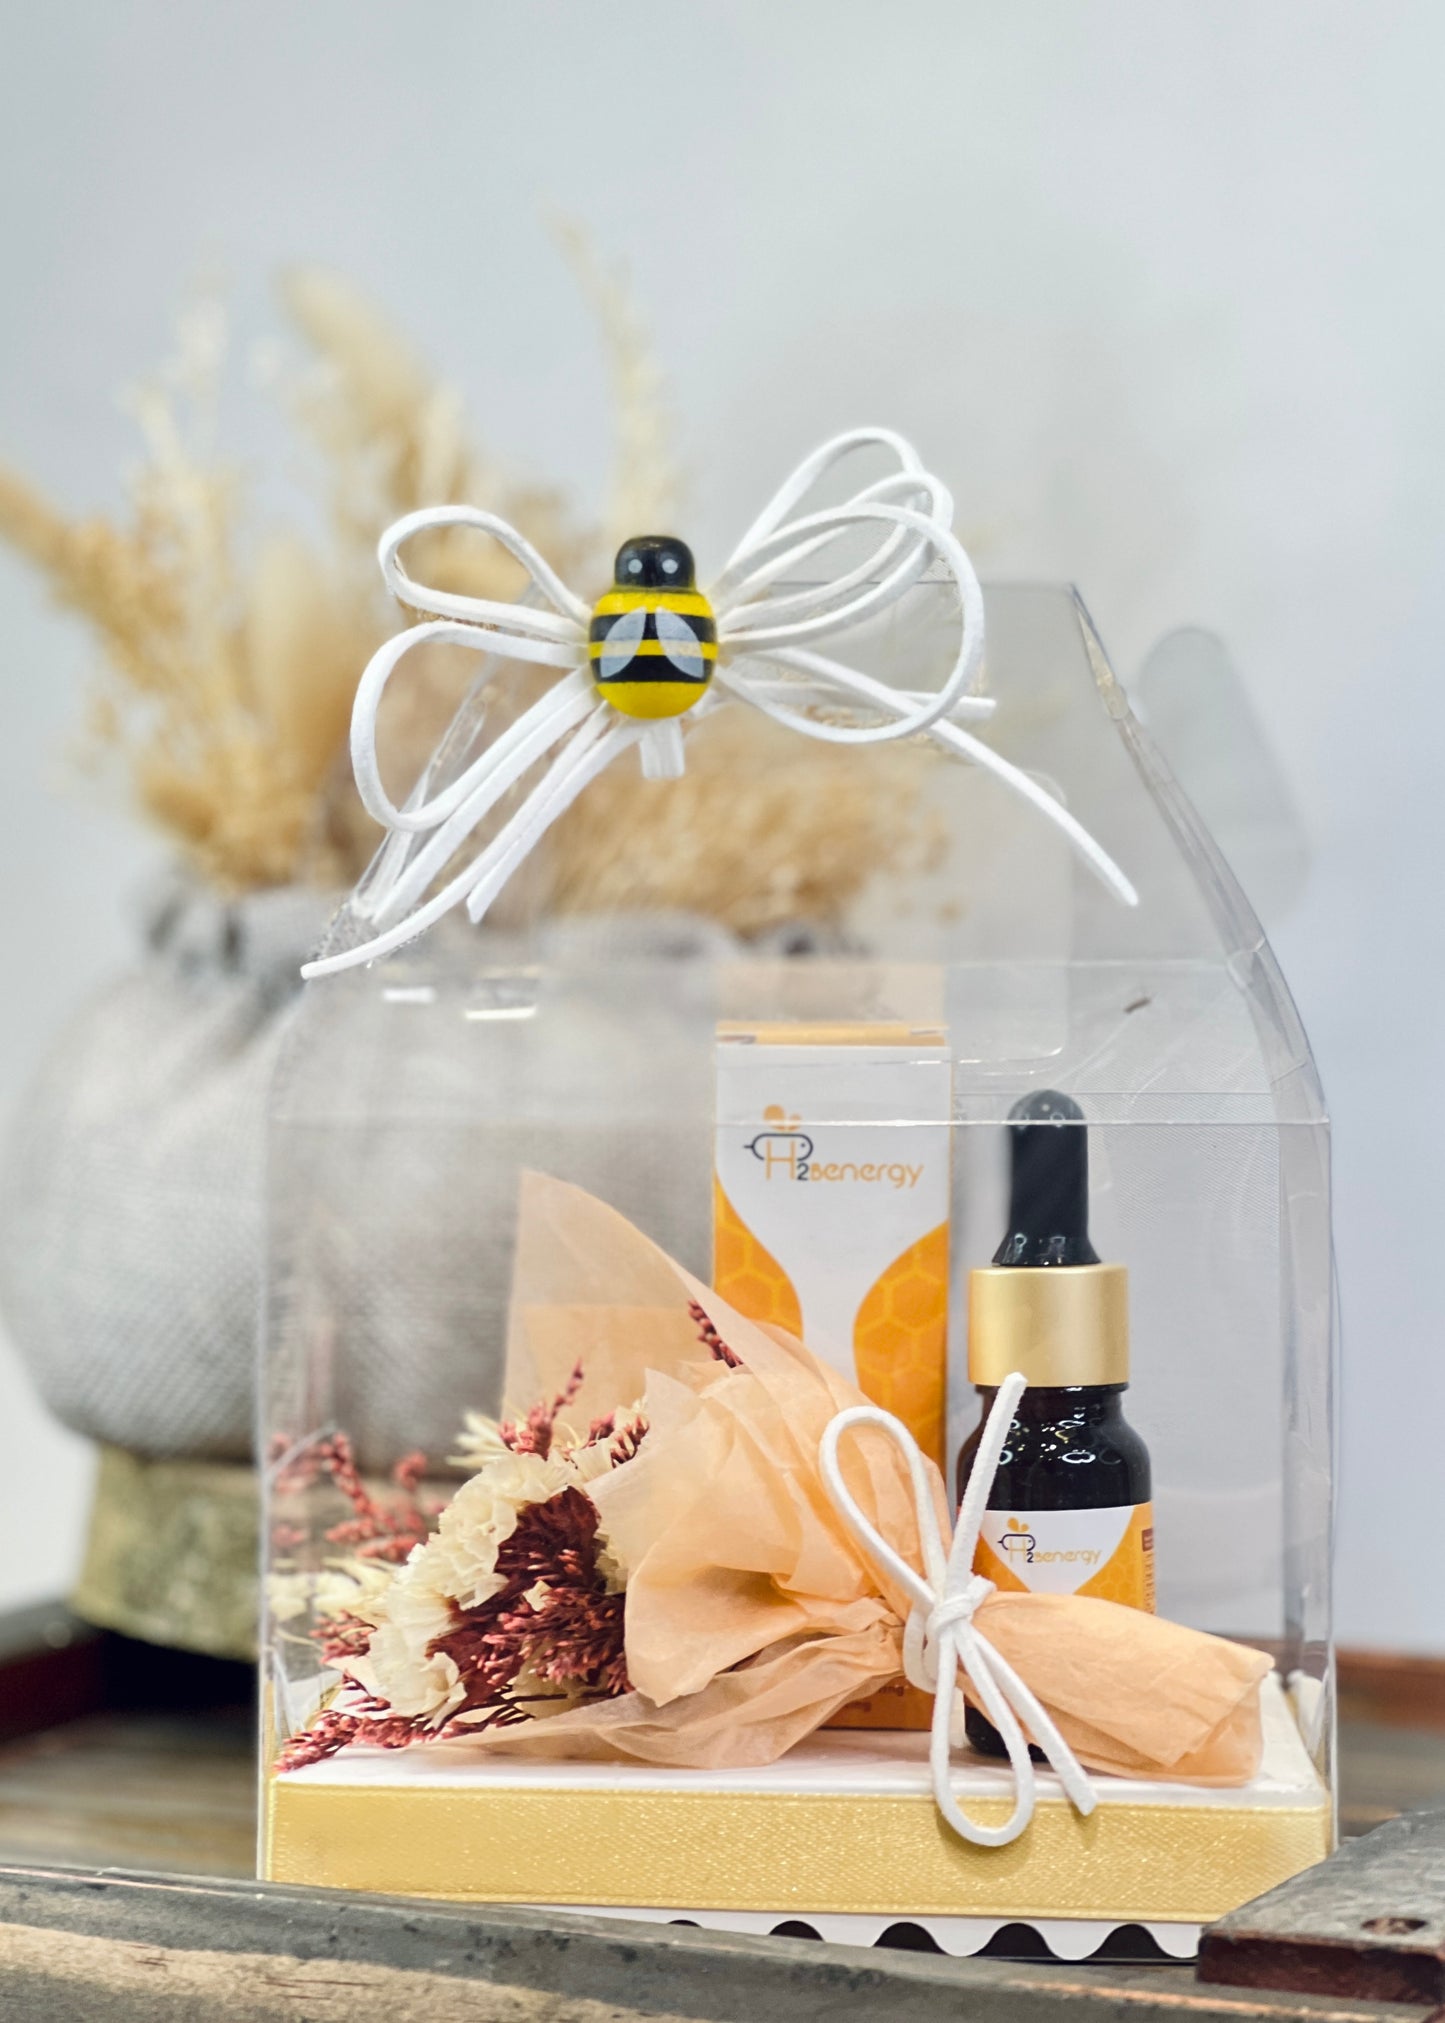 H2benergy Honey Drop | Gift Box